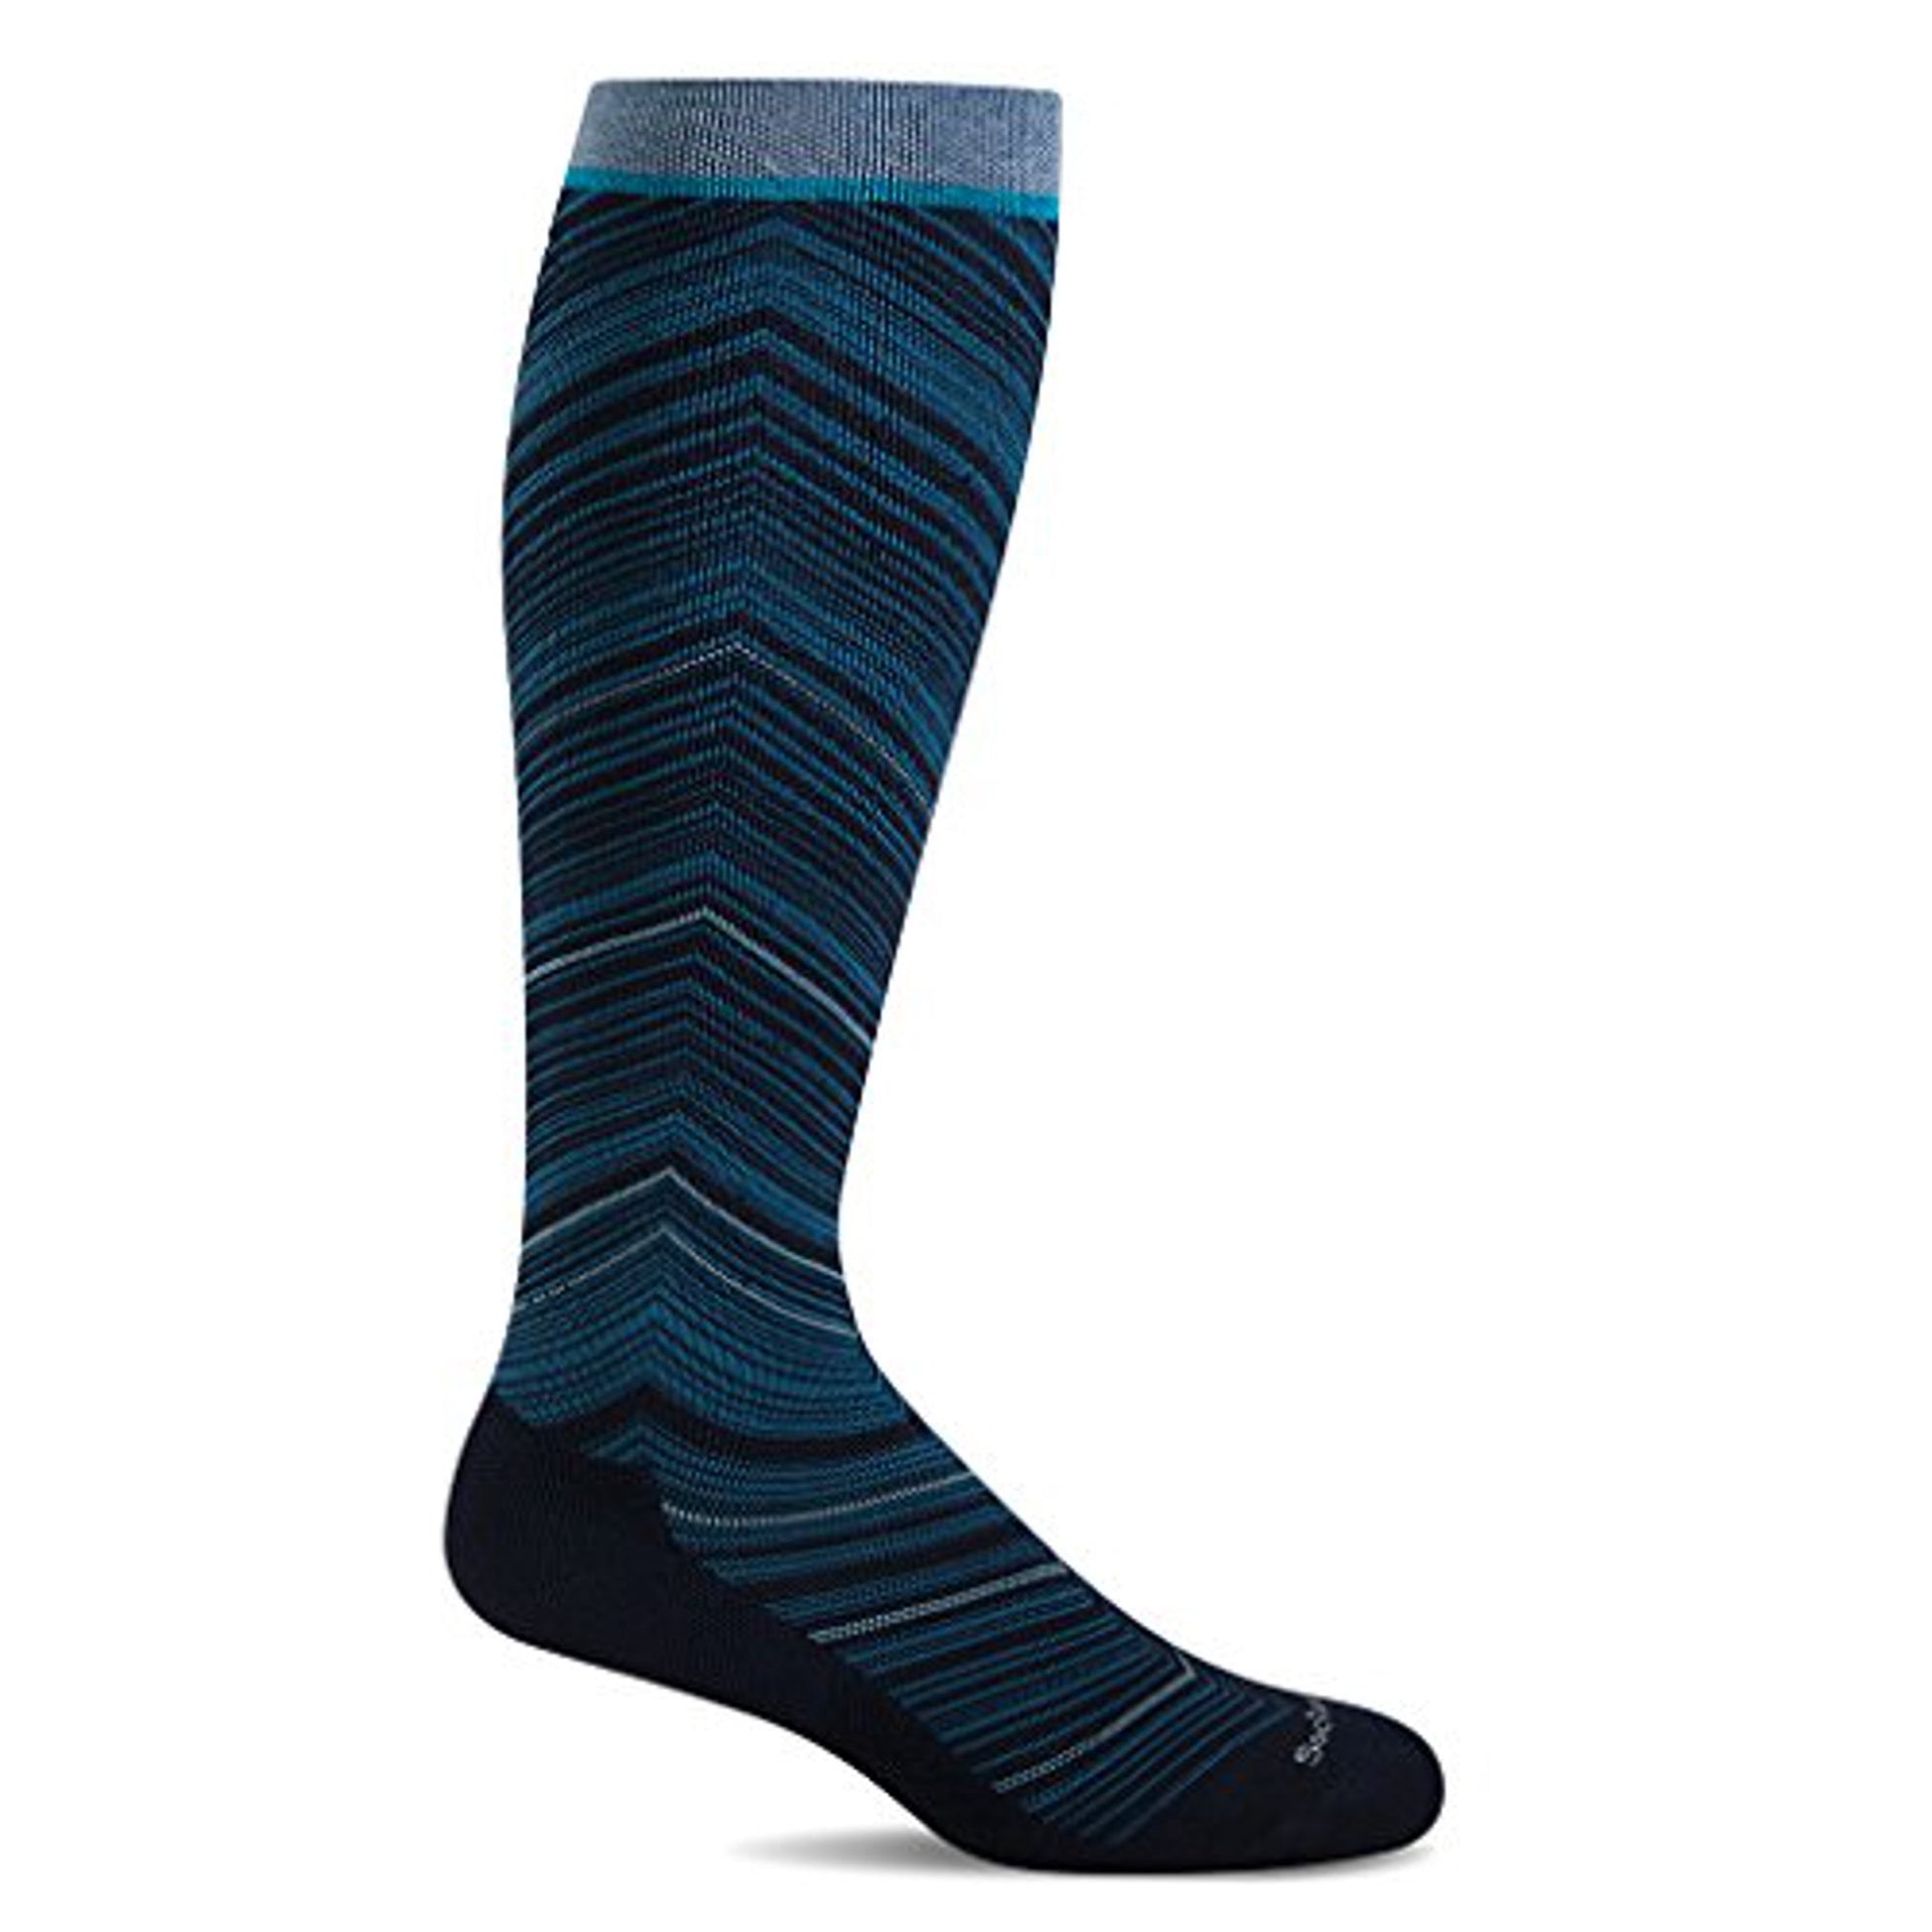 Sockwell Full Flattery 15-20mmHg Wide Calf Graduated Compression Socks